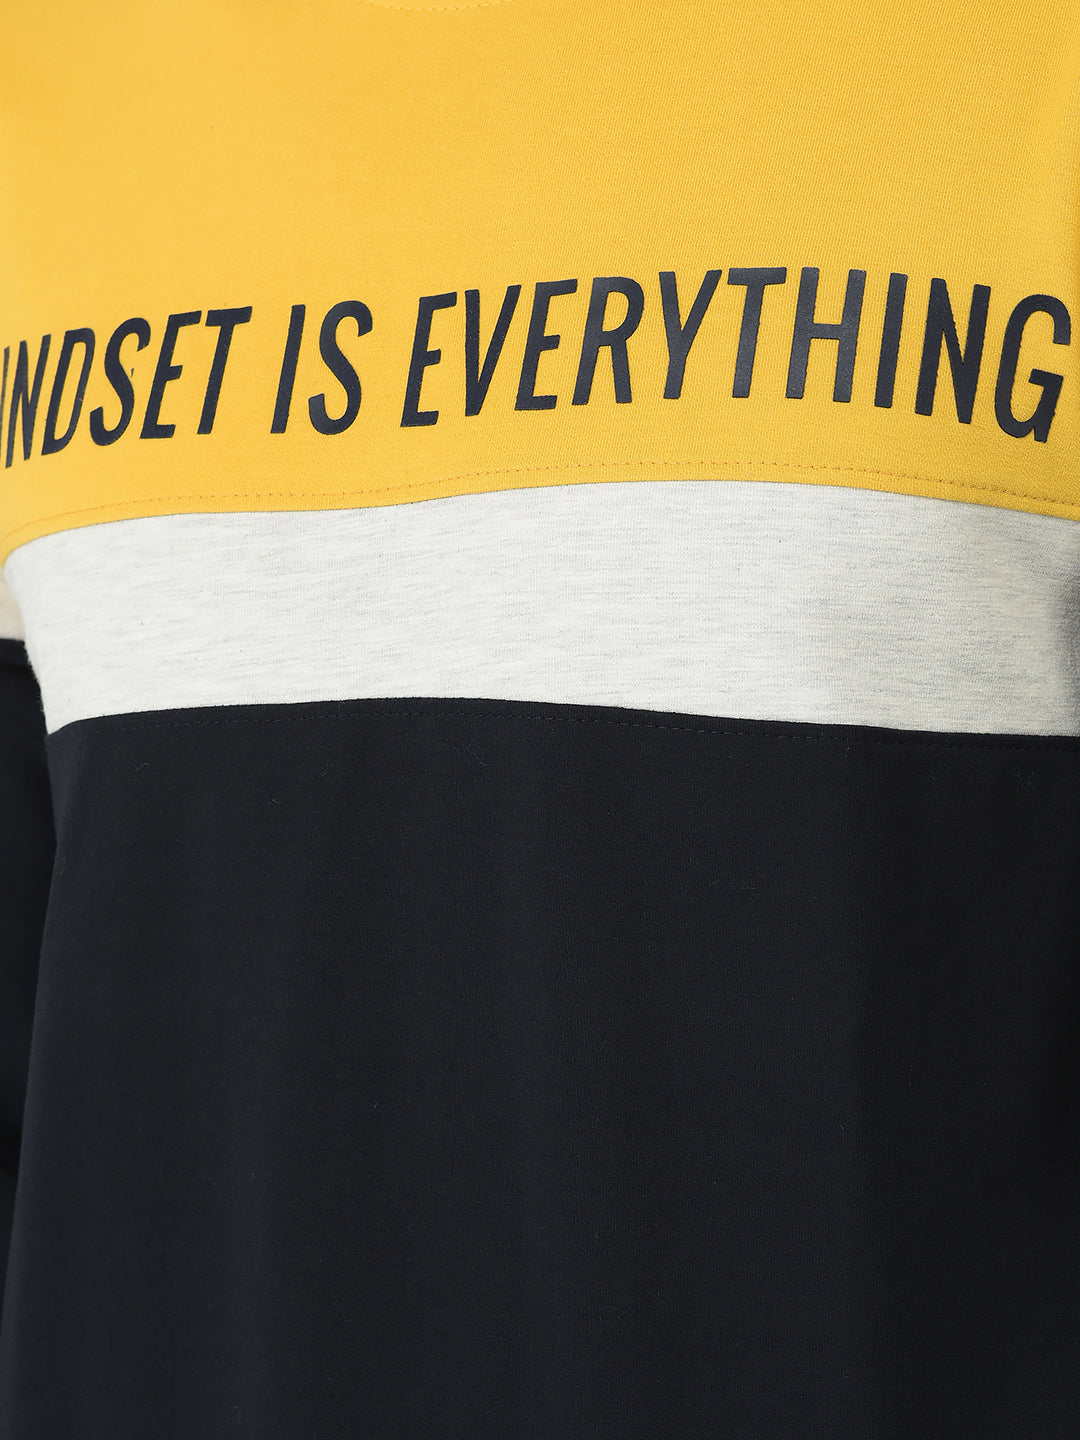  Mustard Colour-Blocked Mindset Sweatshirt